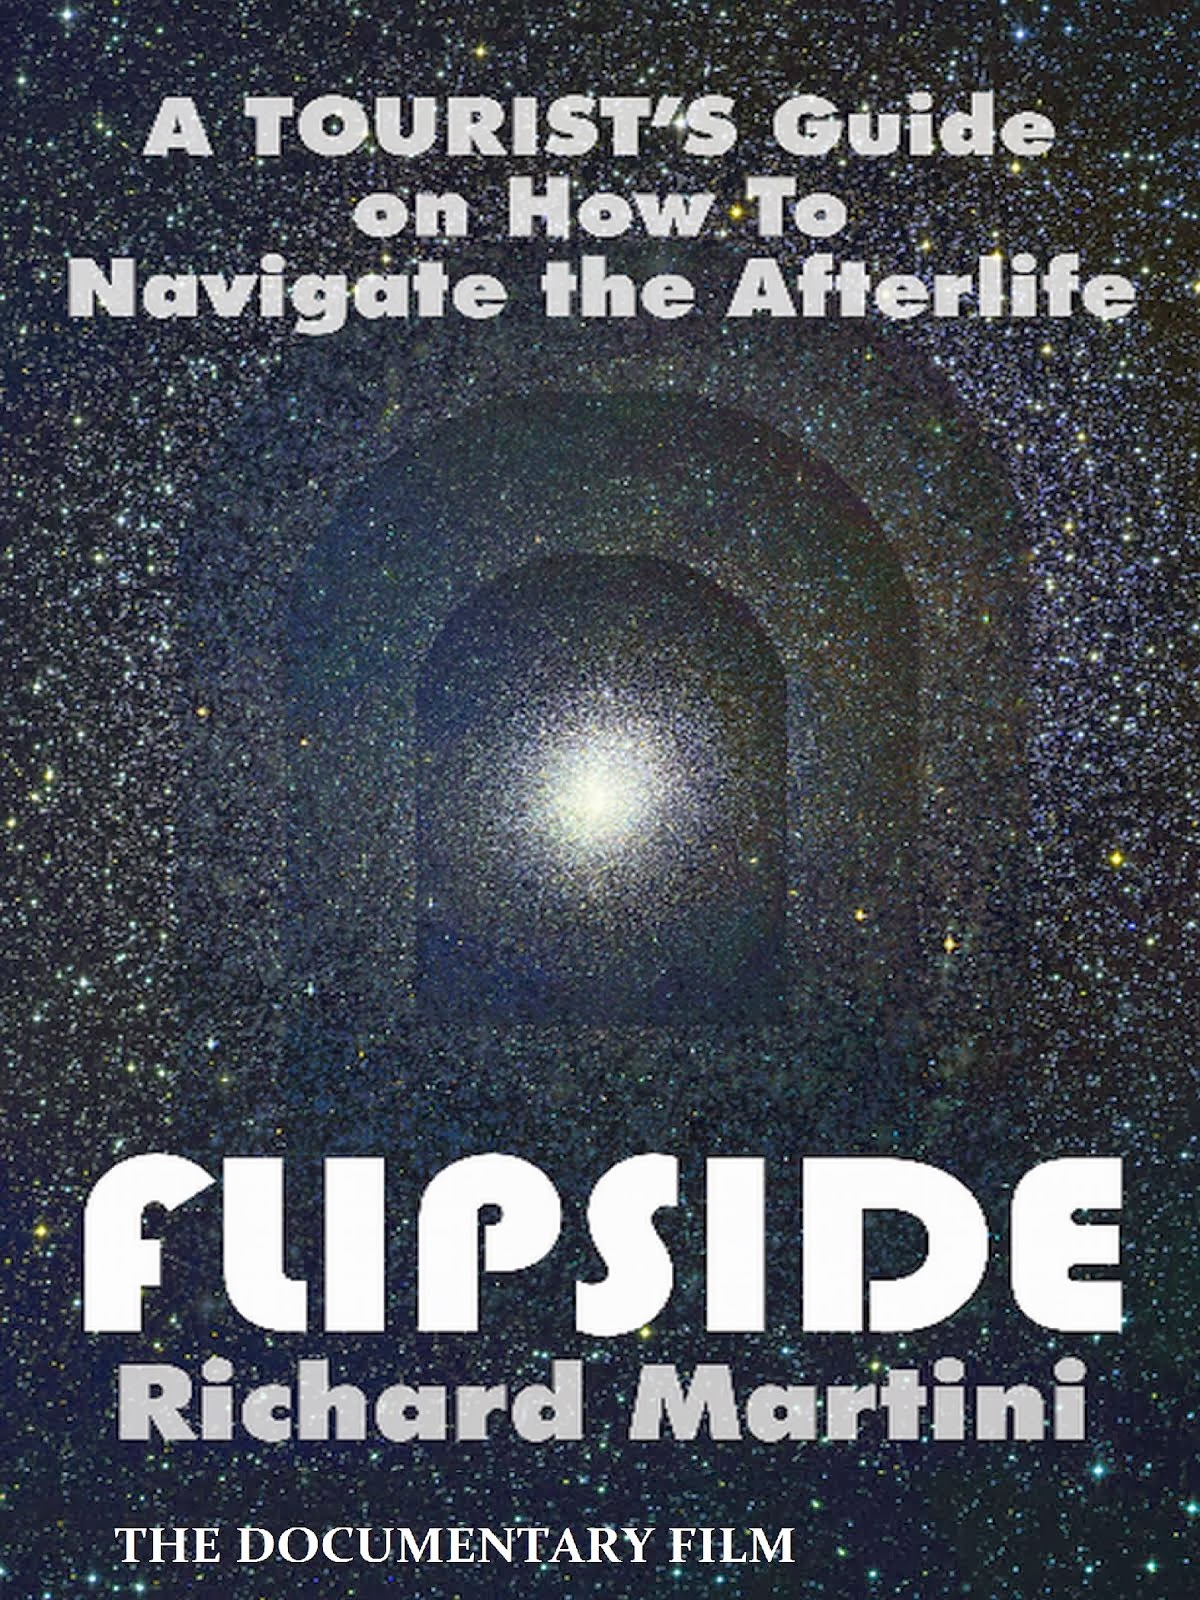 DVD of Flipside